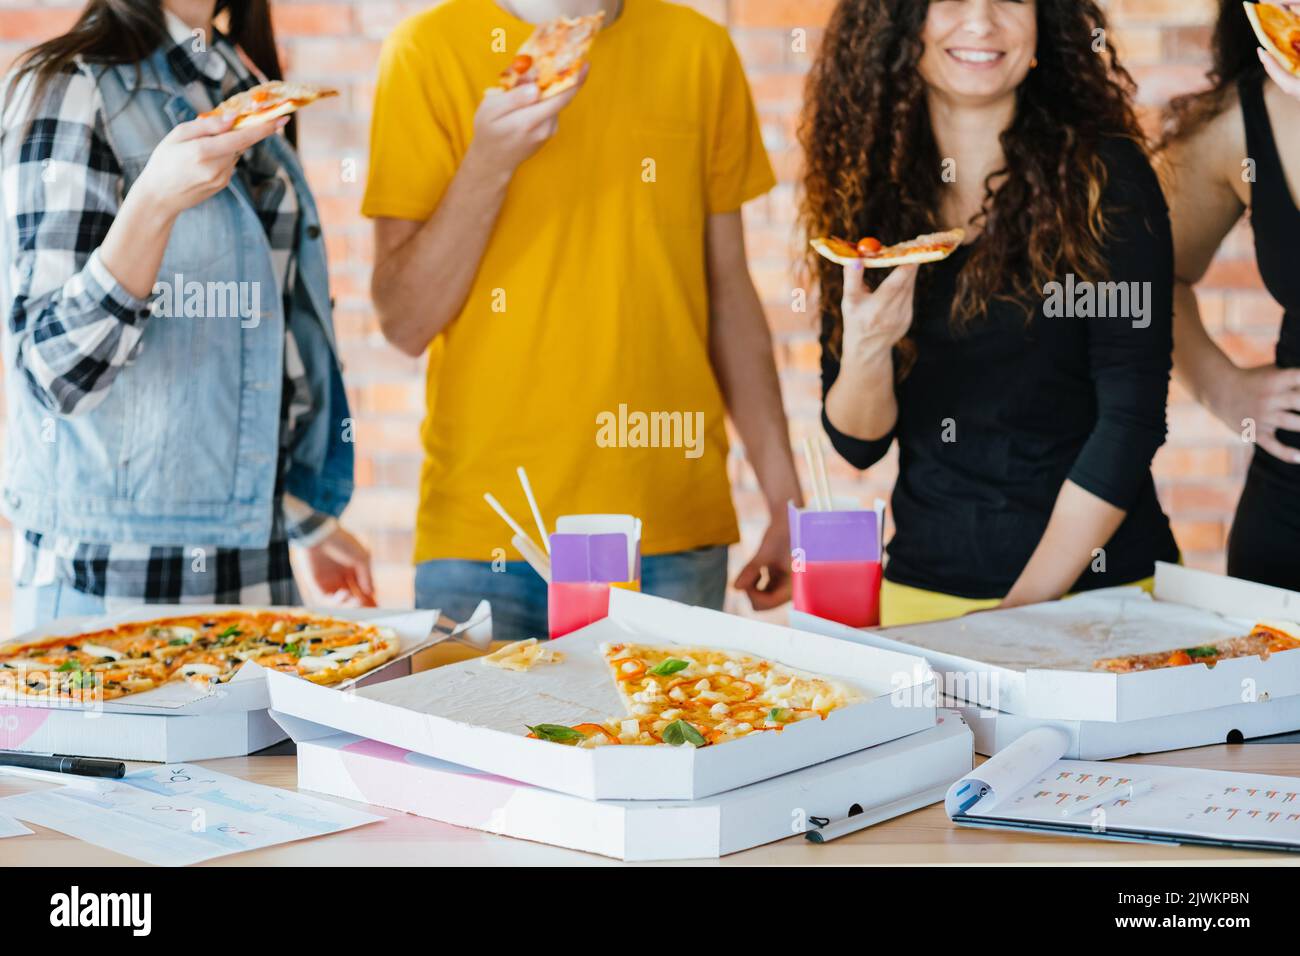 millennials routine unhealthy junk food habit Stock Photo